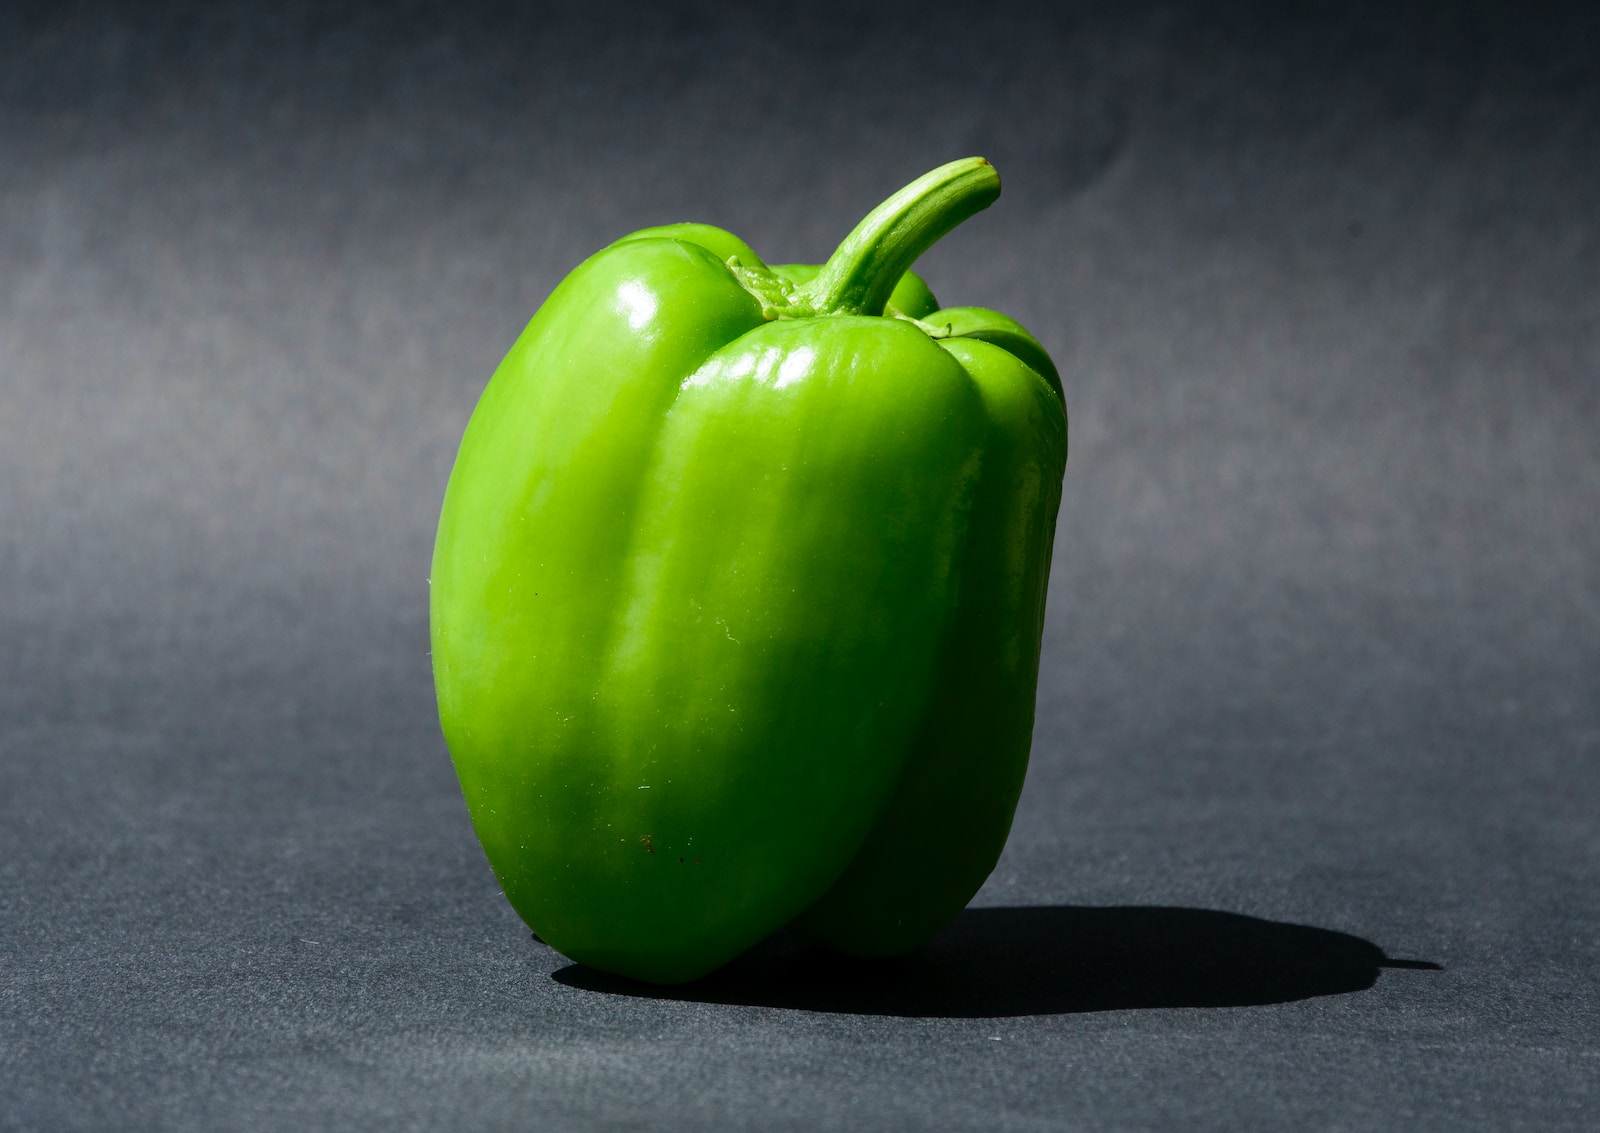 green bell pepper on black textile